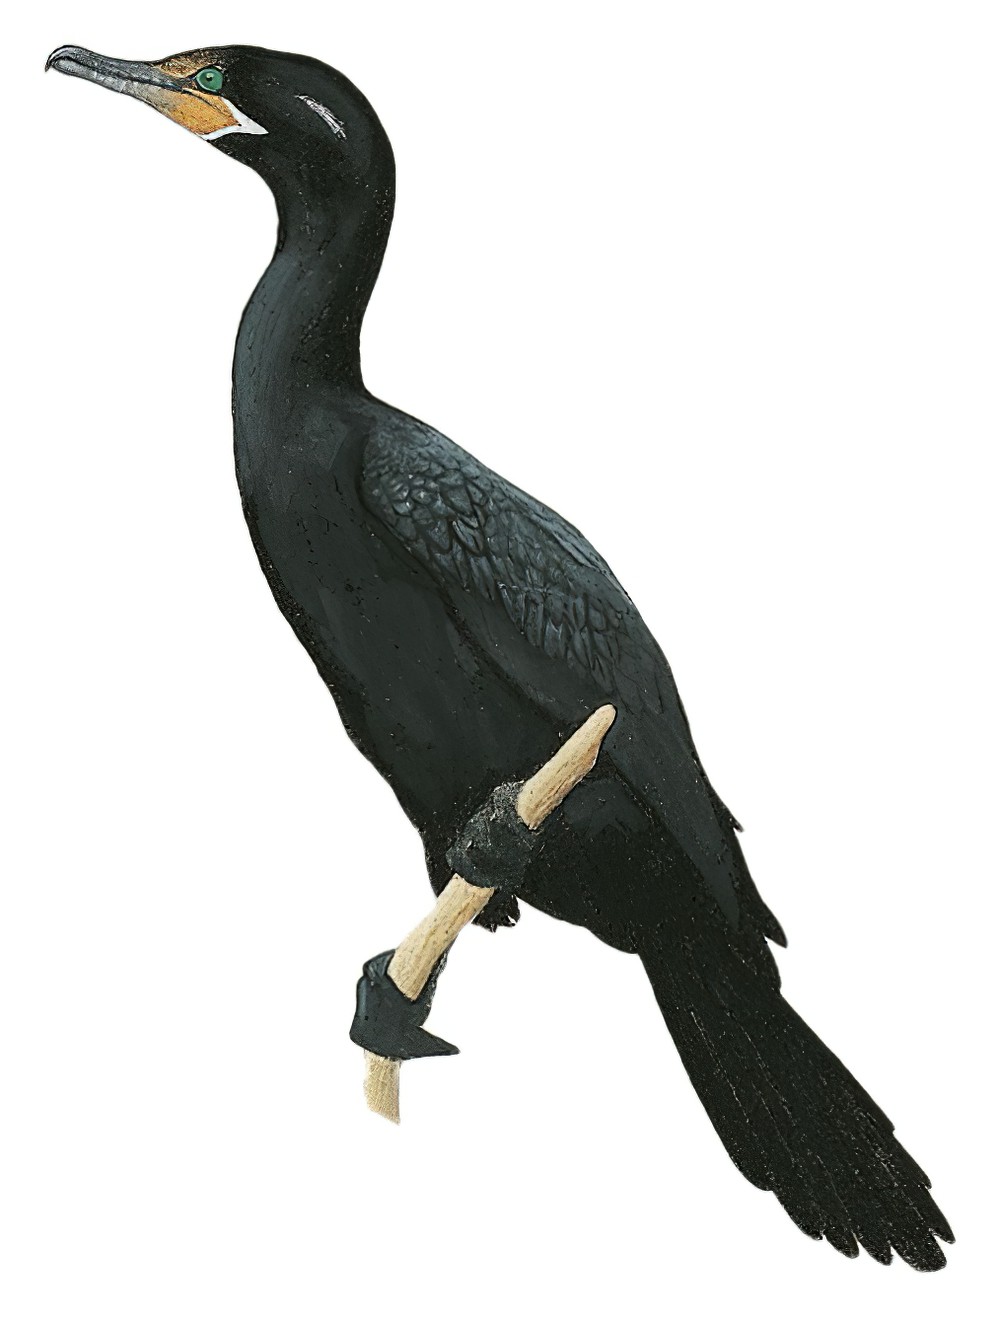 Neotropic Cormorant / Phalacrocorax brasilianus